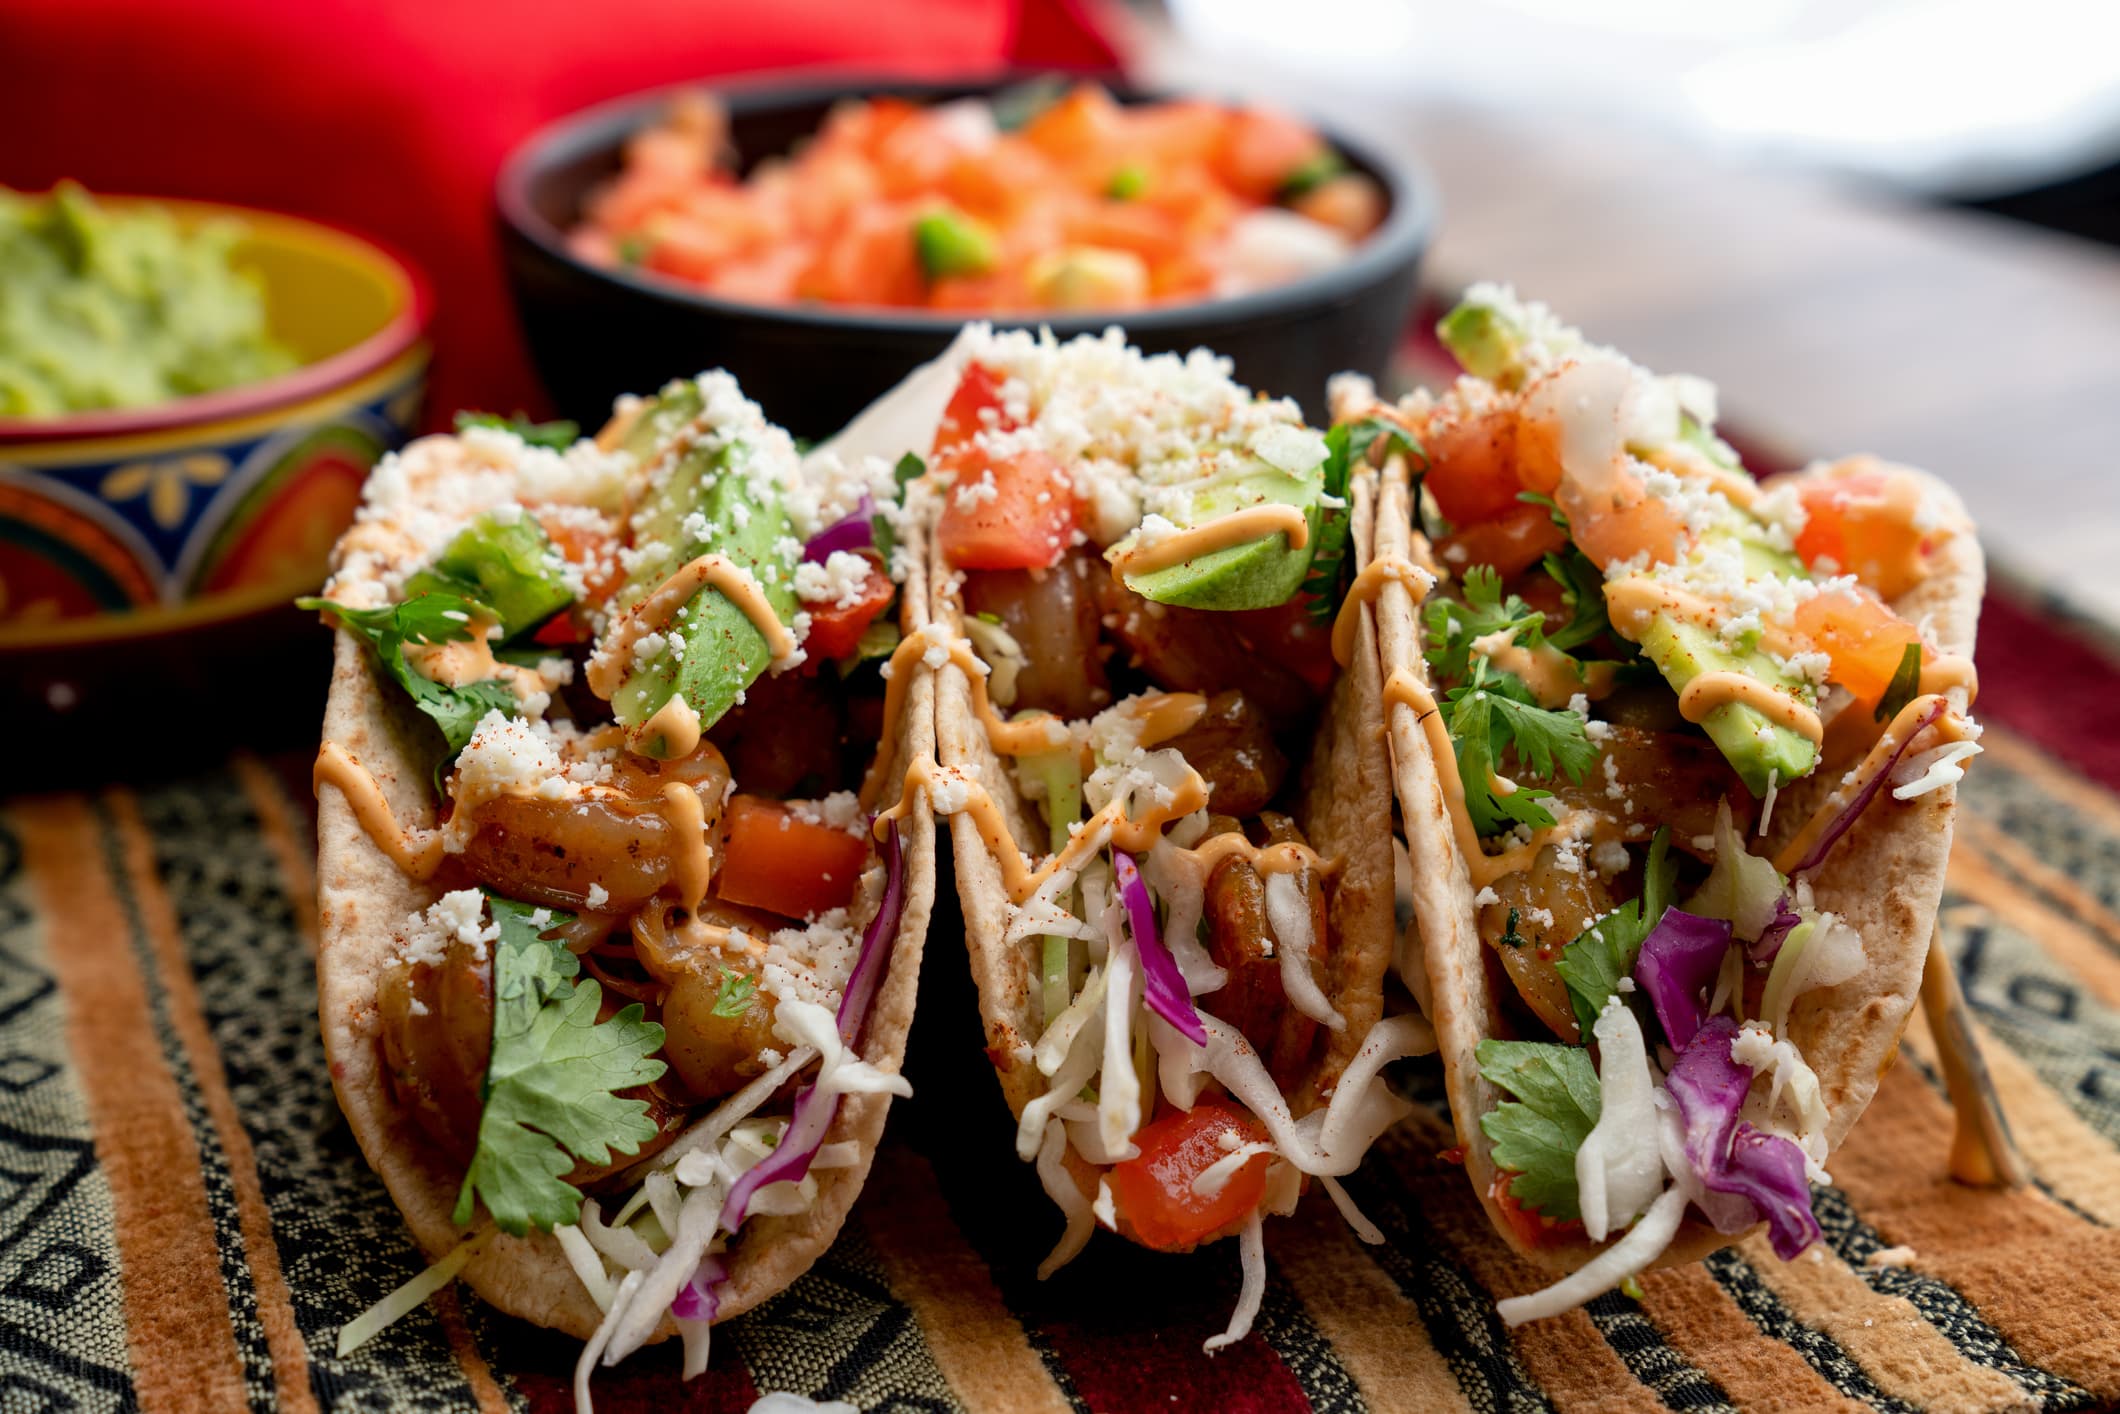 A beautiful arrangement of shrimp tacos with pico de gallo, avocado, cilantro, chipotle sour cream, and cotija cheese